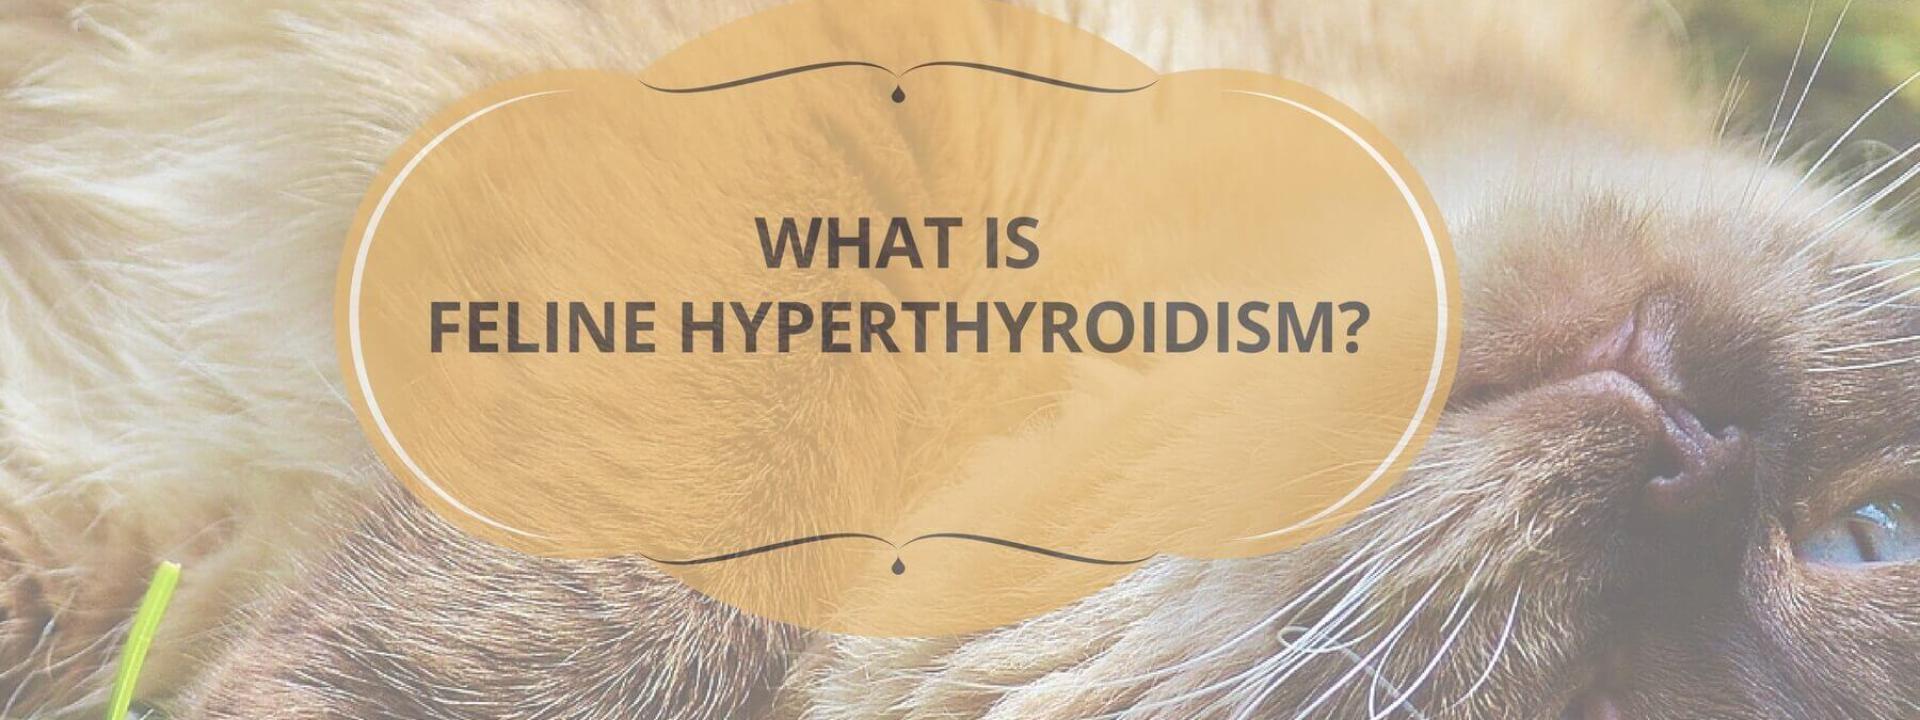 feline-hyperthyroidism-blog.jpg